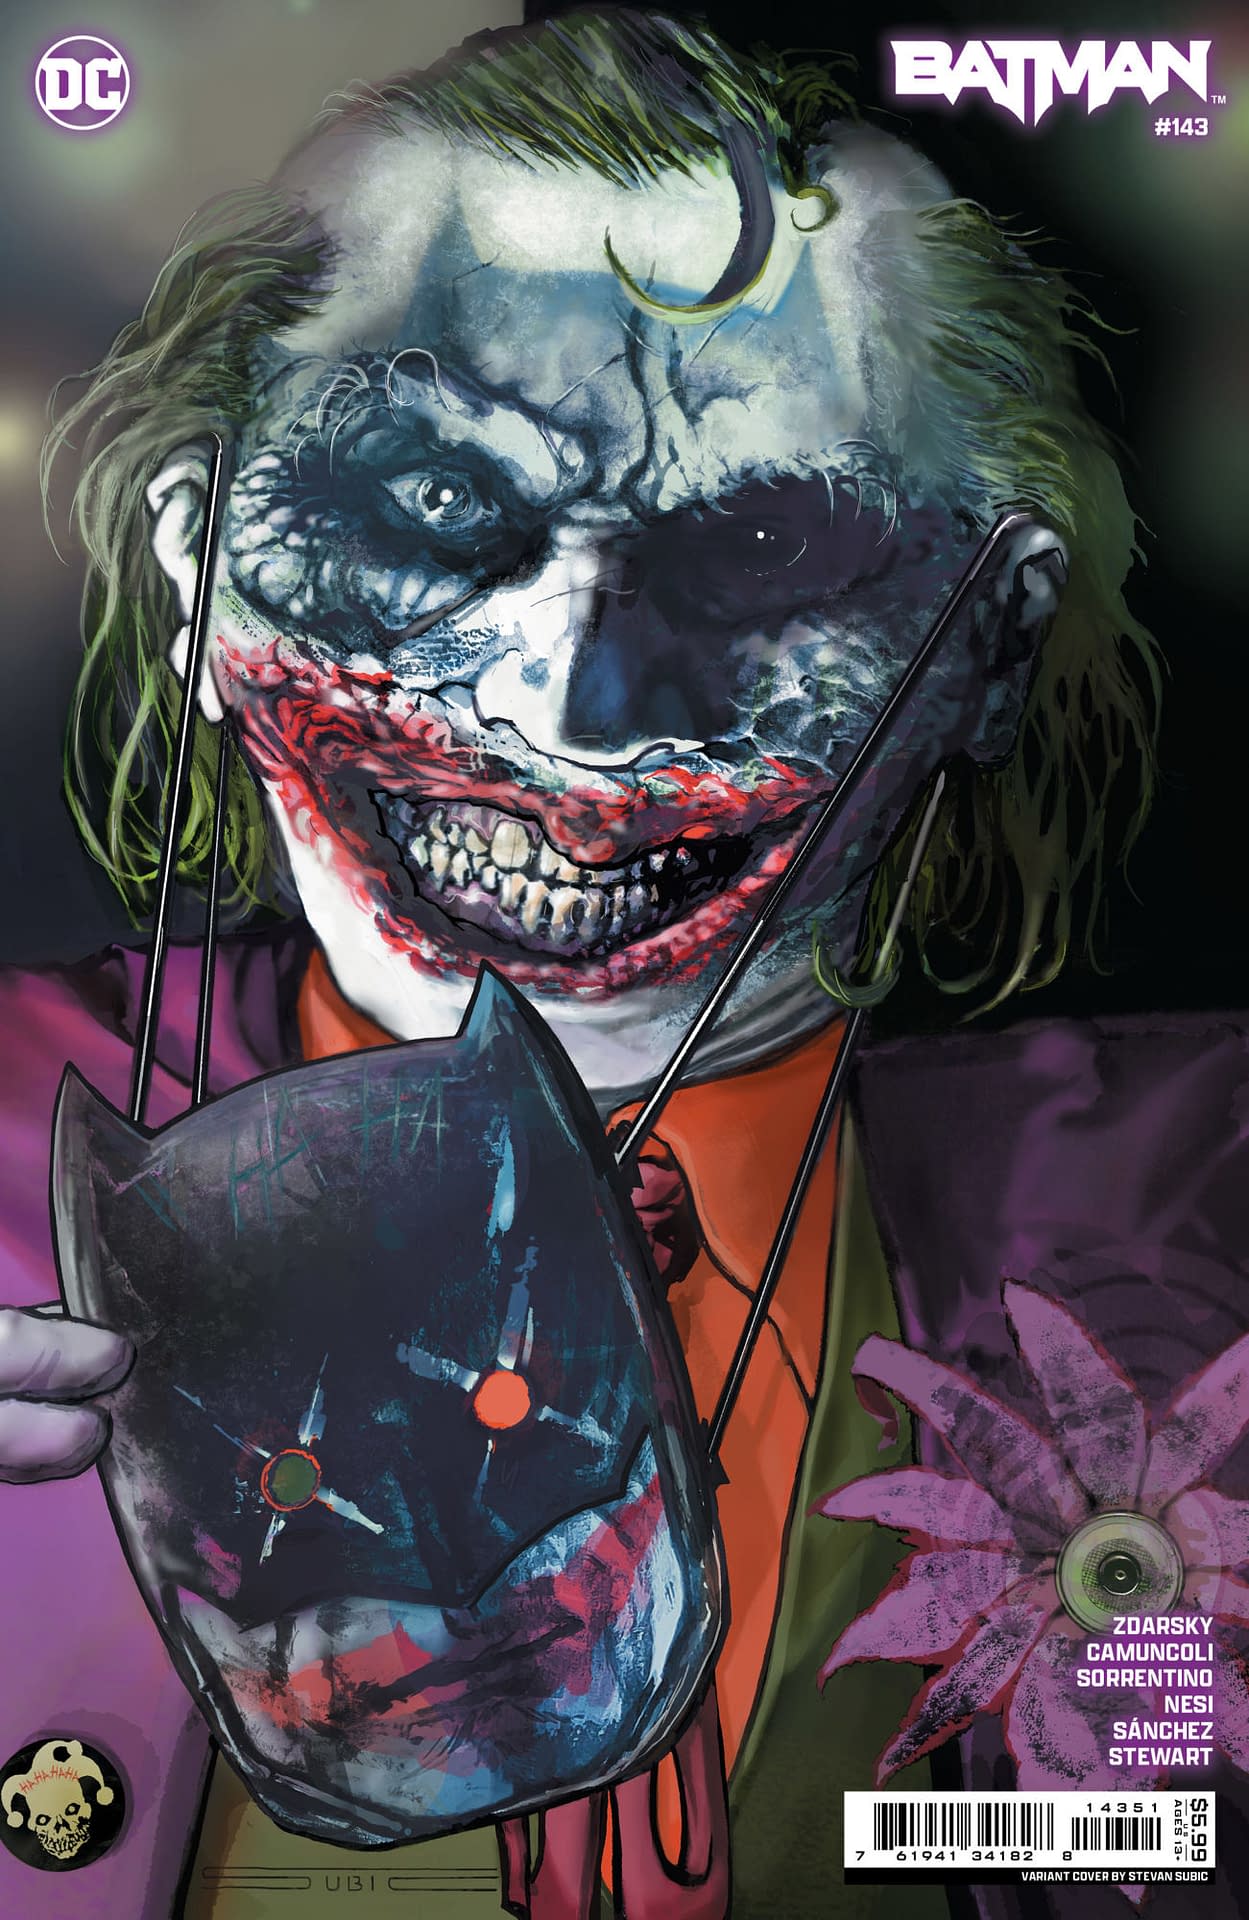 Batman #143 Preview: Joker's Blast from the Bat-Past